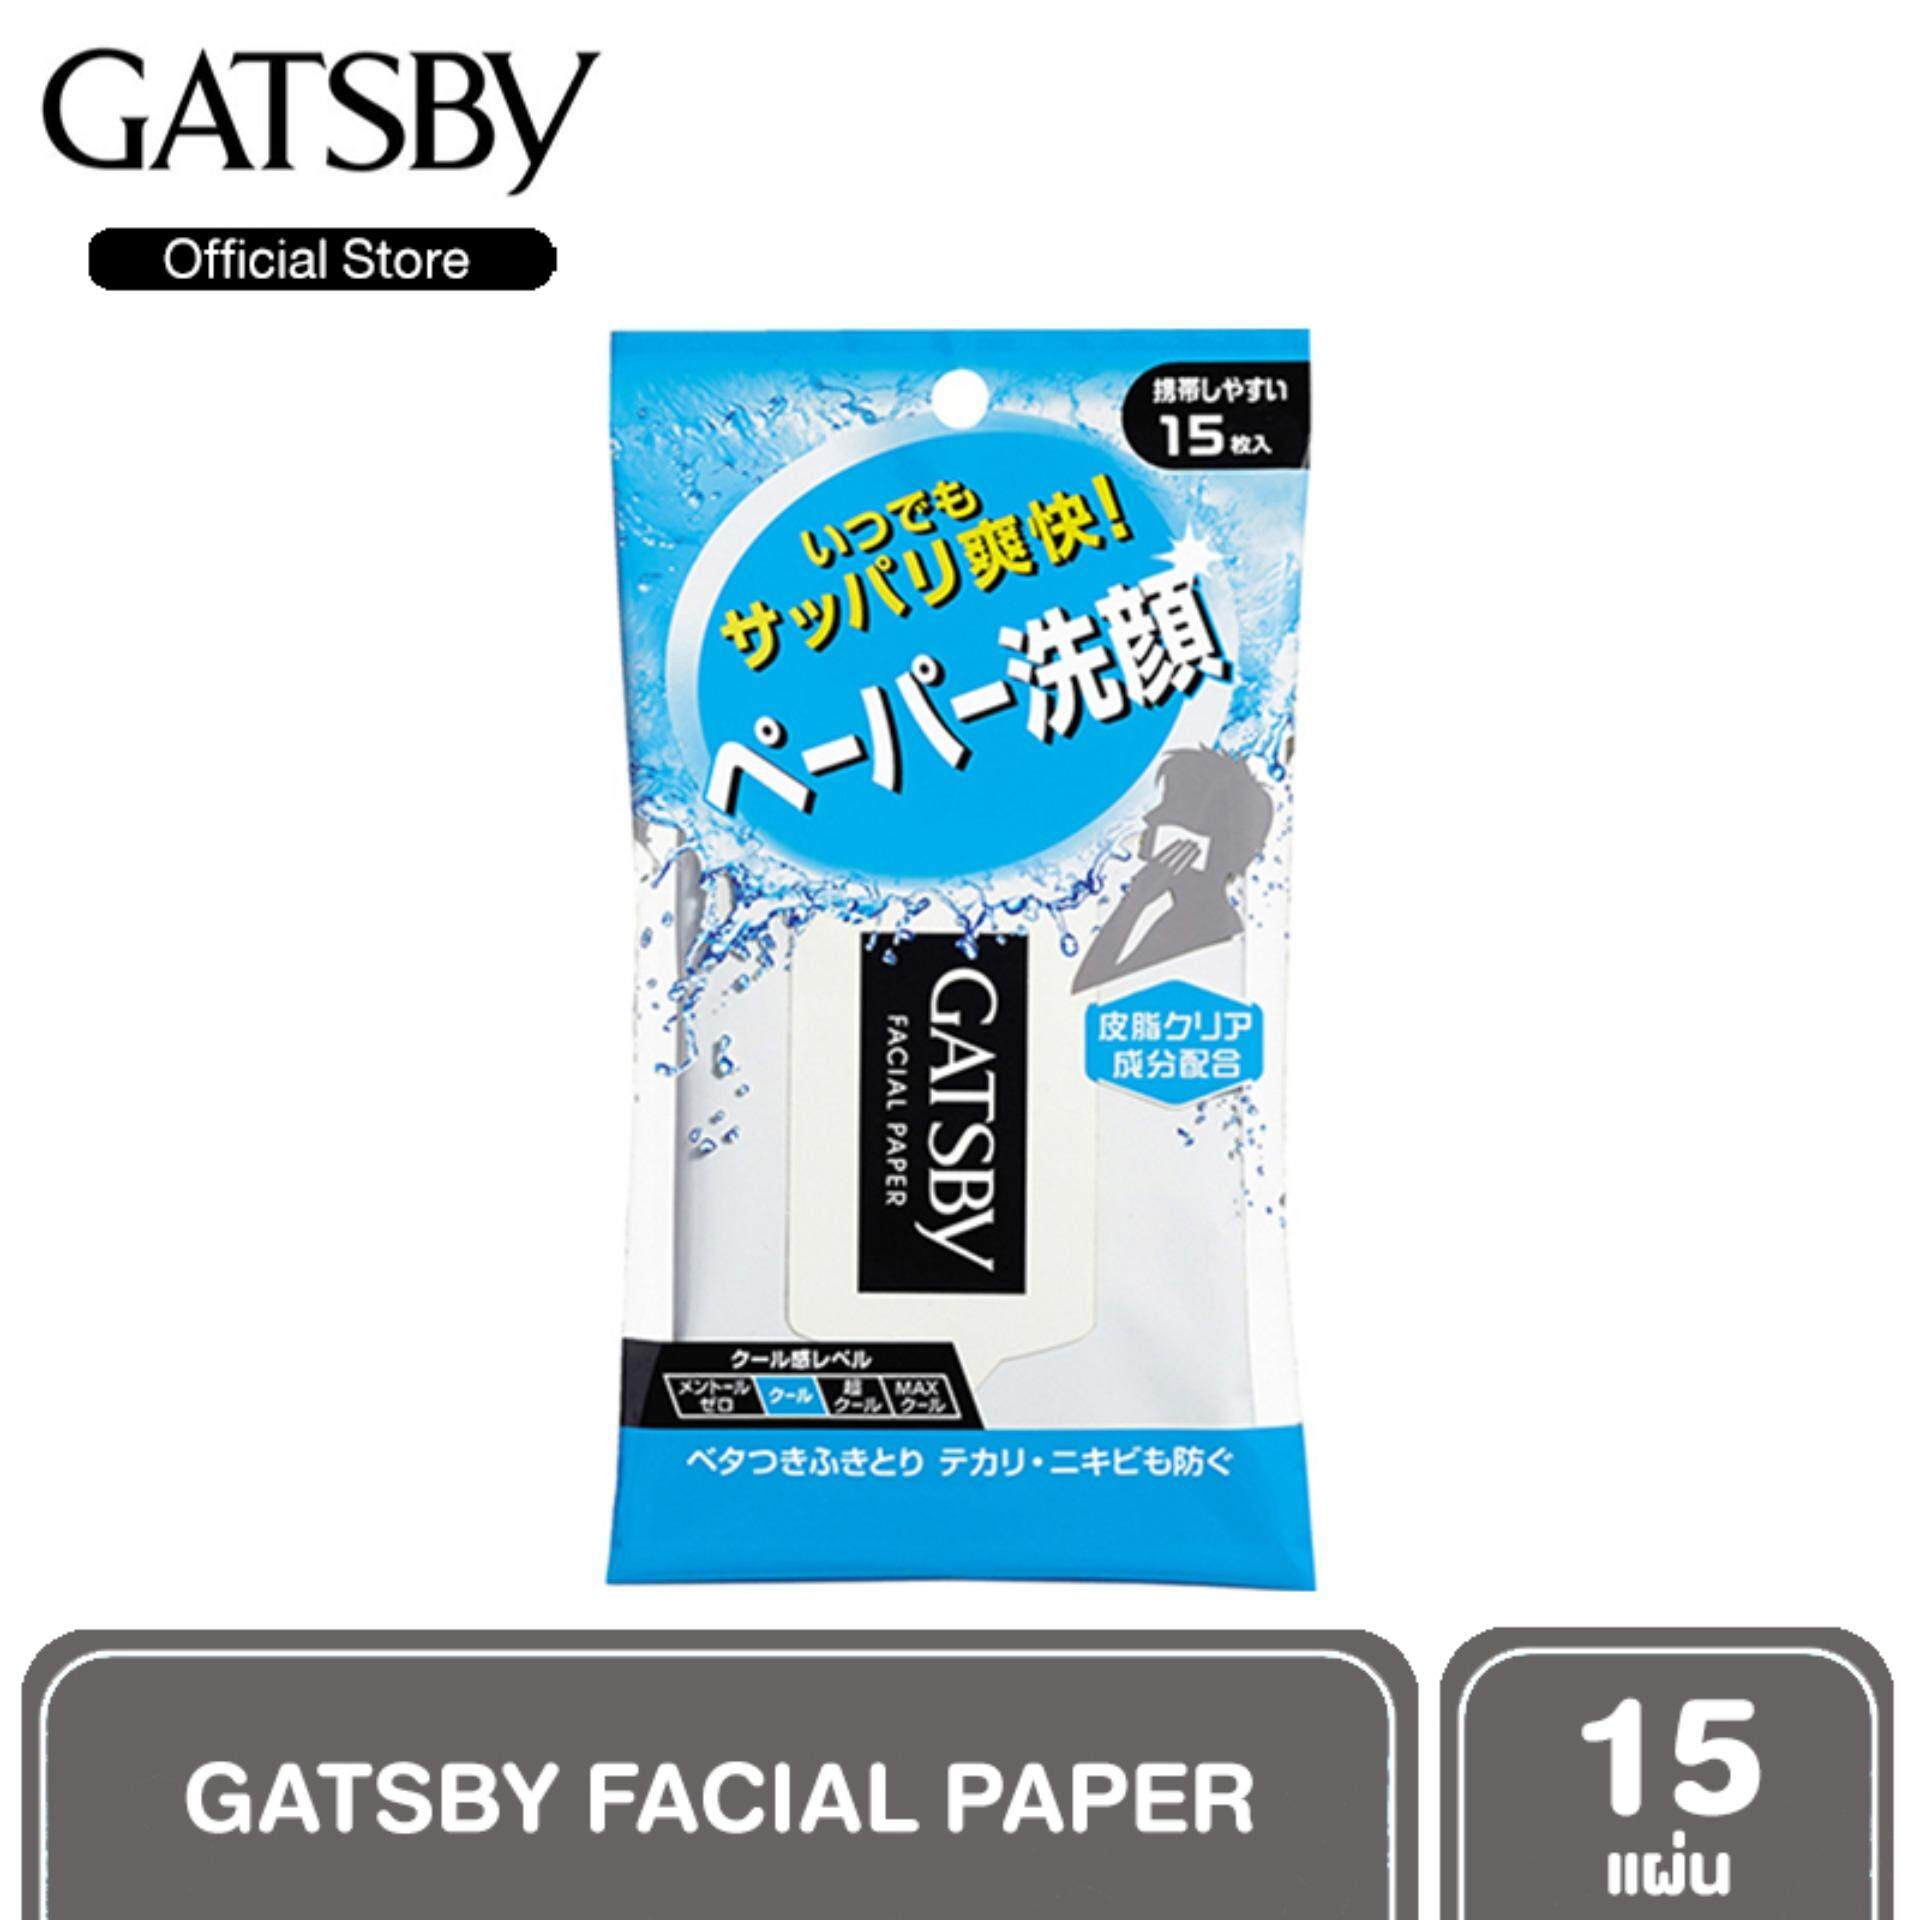 Gatsby Facial Paper แกสบี้ เฟเชี่ยล เปเปอร์ กระดาษเย็นสำหรับเช็ดหน้า ขจัดเหงื่อ ความมัน สิ่งสกปรก 15 แผ่น. 